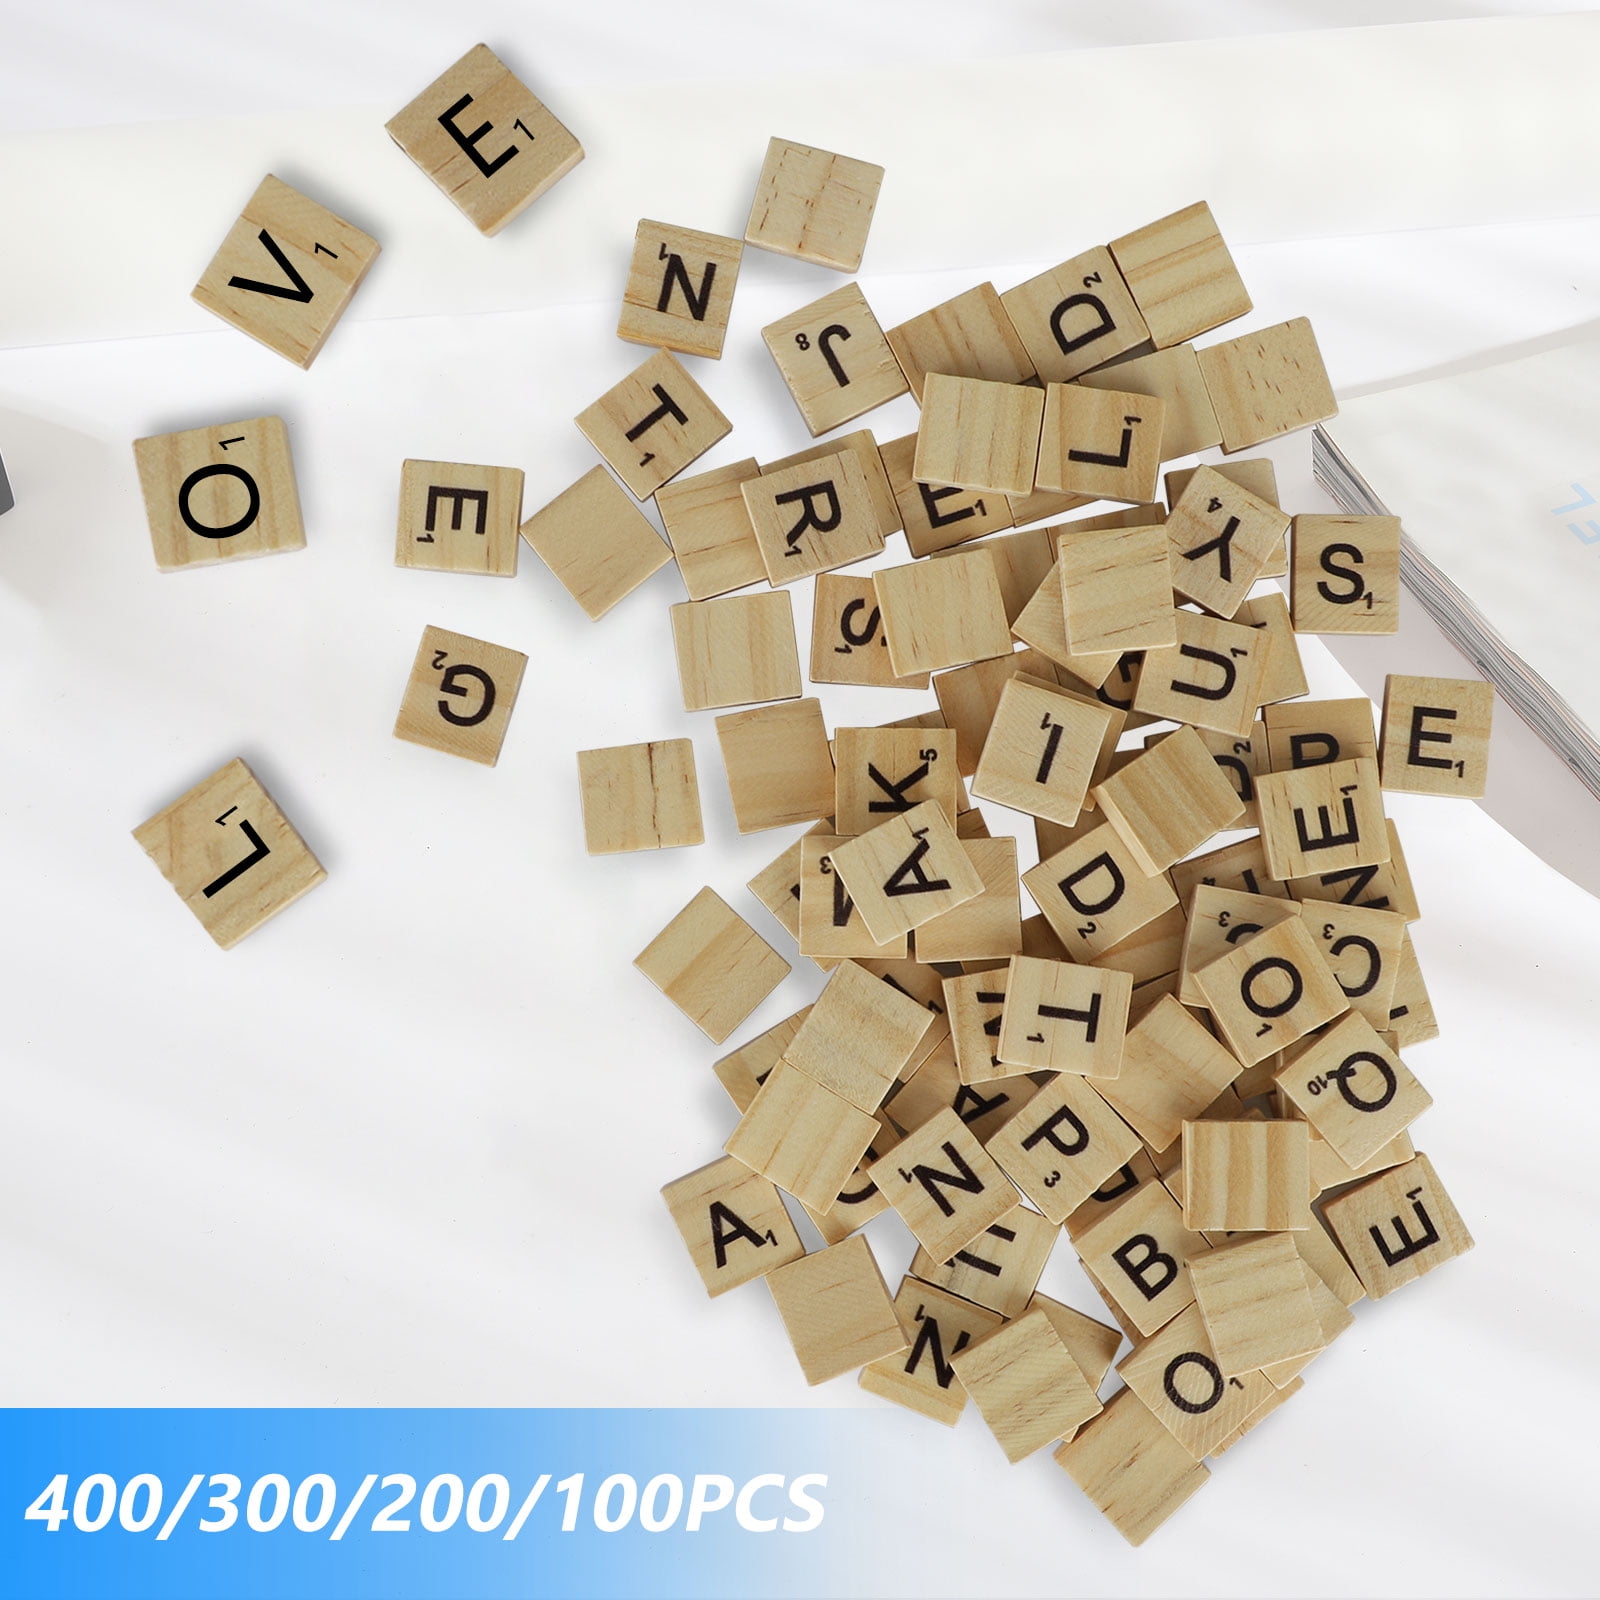 100Pcs Scrabble Letters for Crafts & Educational Wooden Letters 